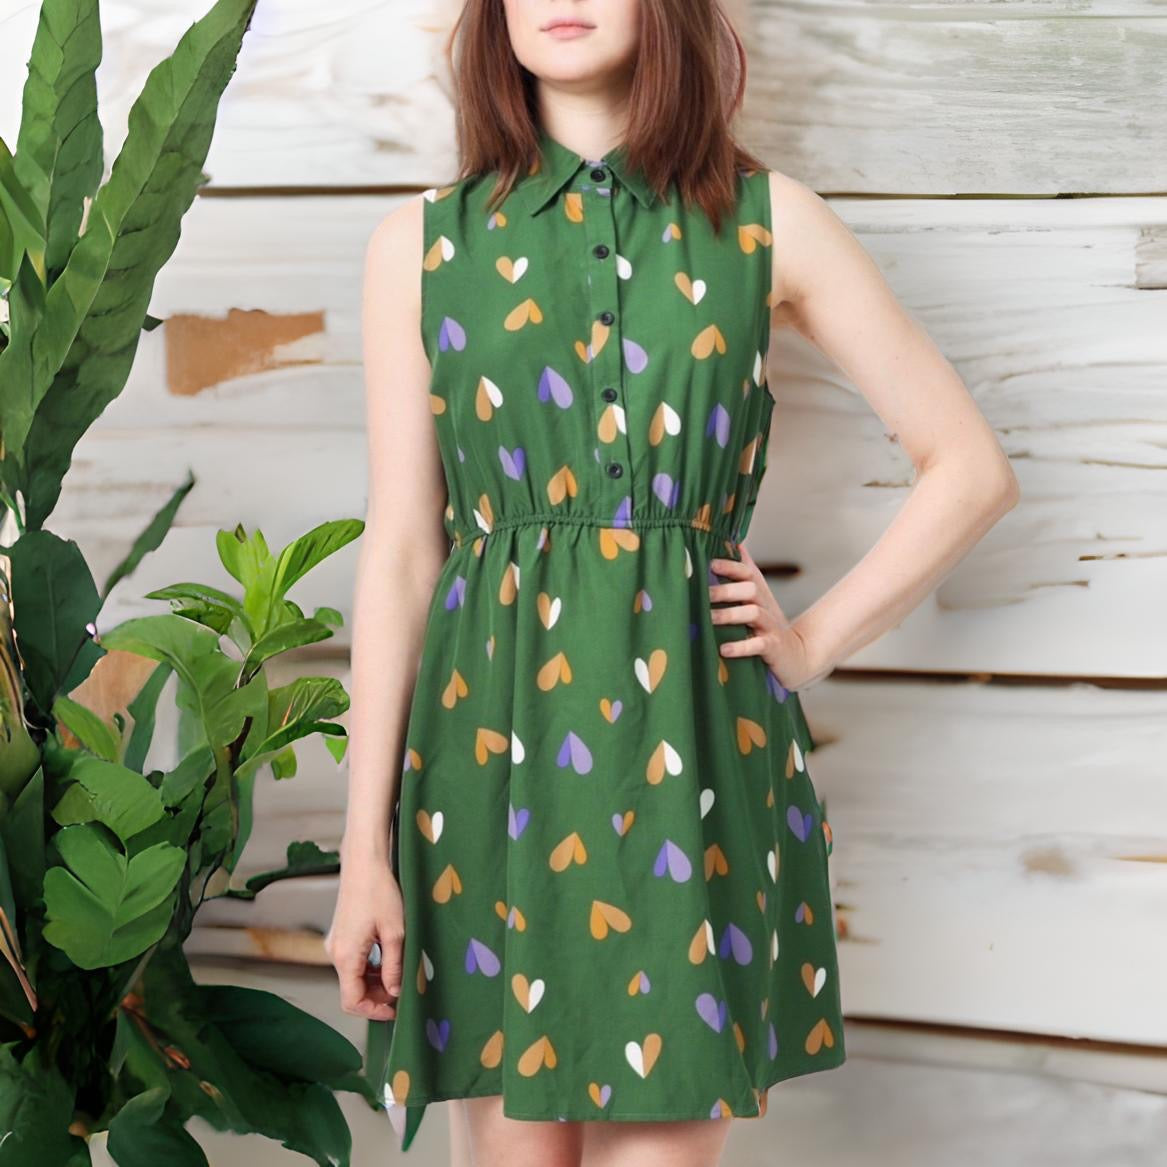 Customized Sleeveless Heart Pattern Dress Above Knee Length w/Stretchable Waist Design - Green Heart